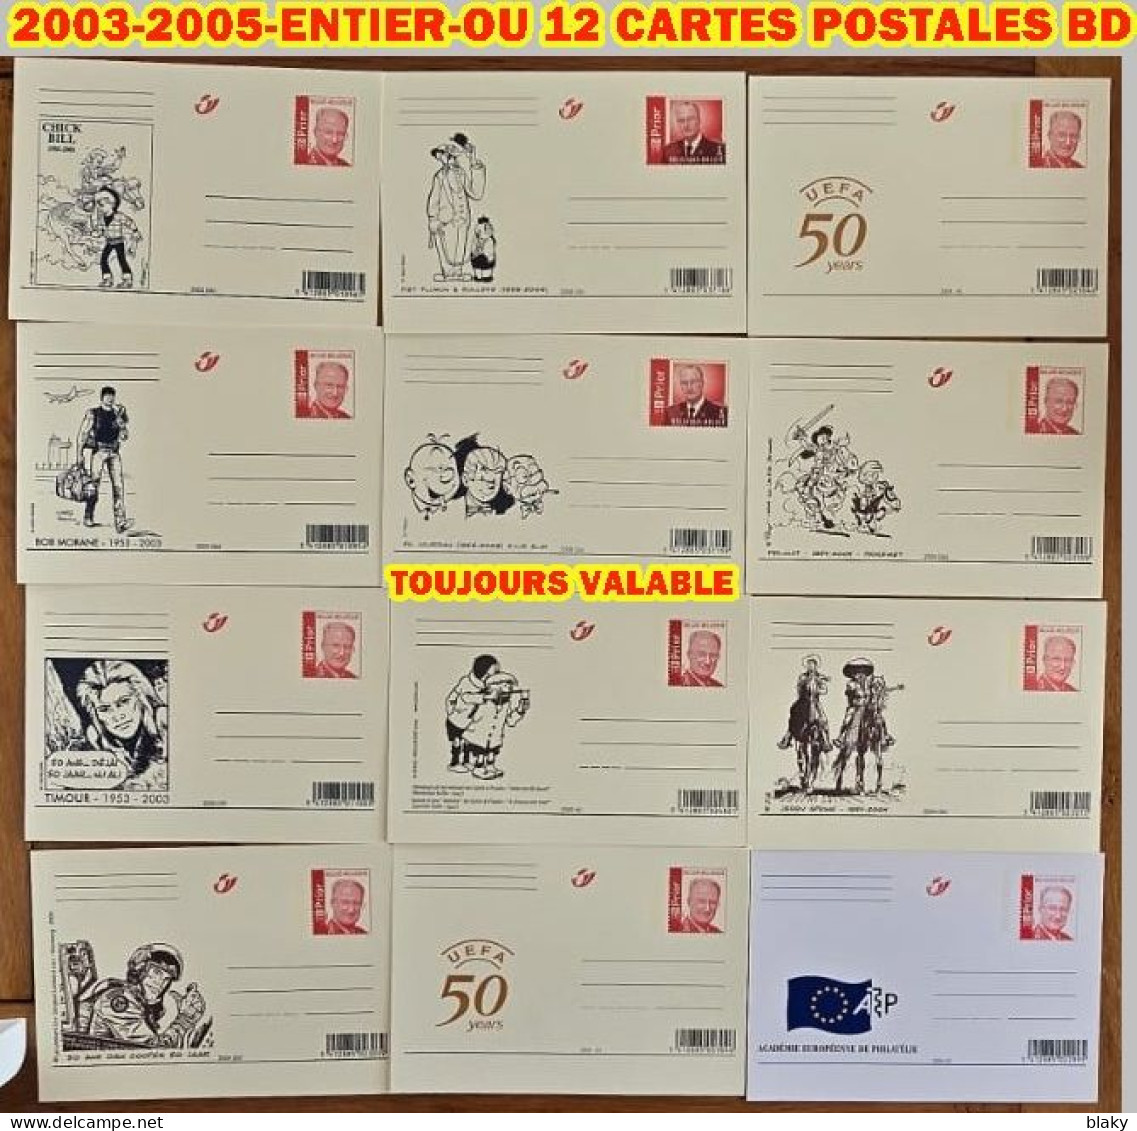 2003-2005-ENTIER-OU 12 CARTES POSTALES BD * IMPORTANT PRE TIMBREES - Illustrierte Postkarten (1971-2014) [BK]